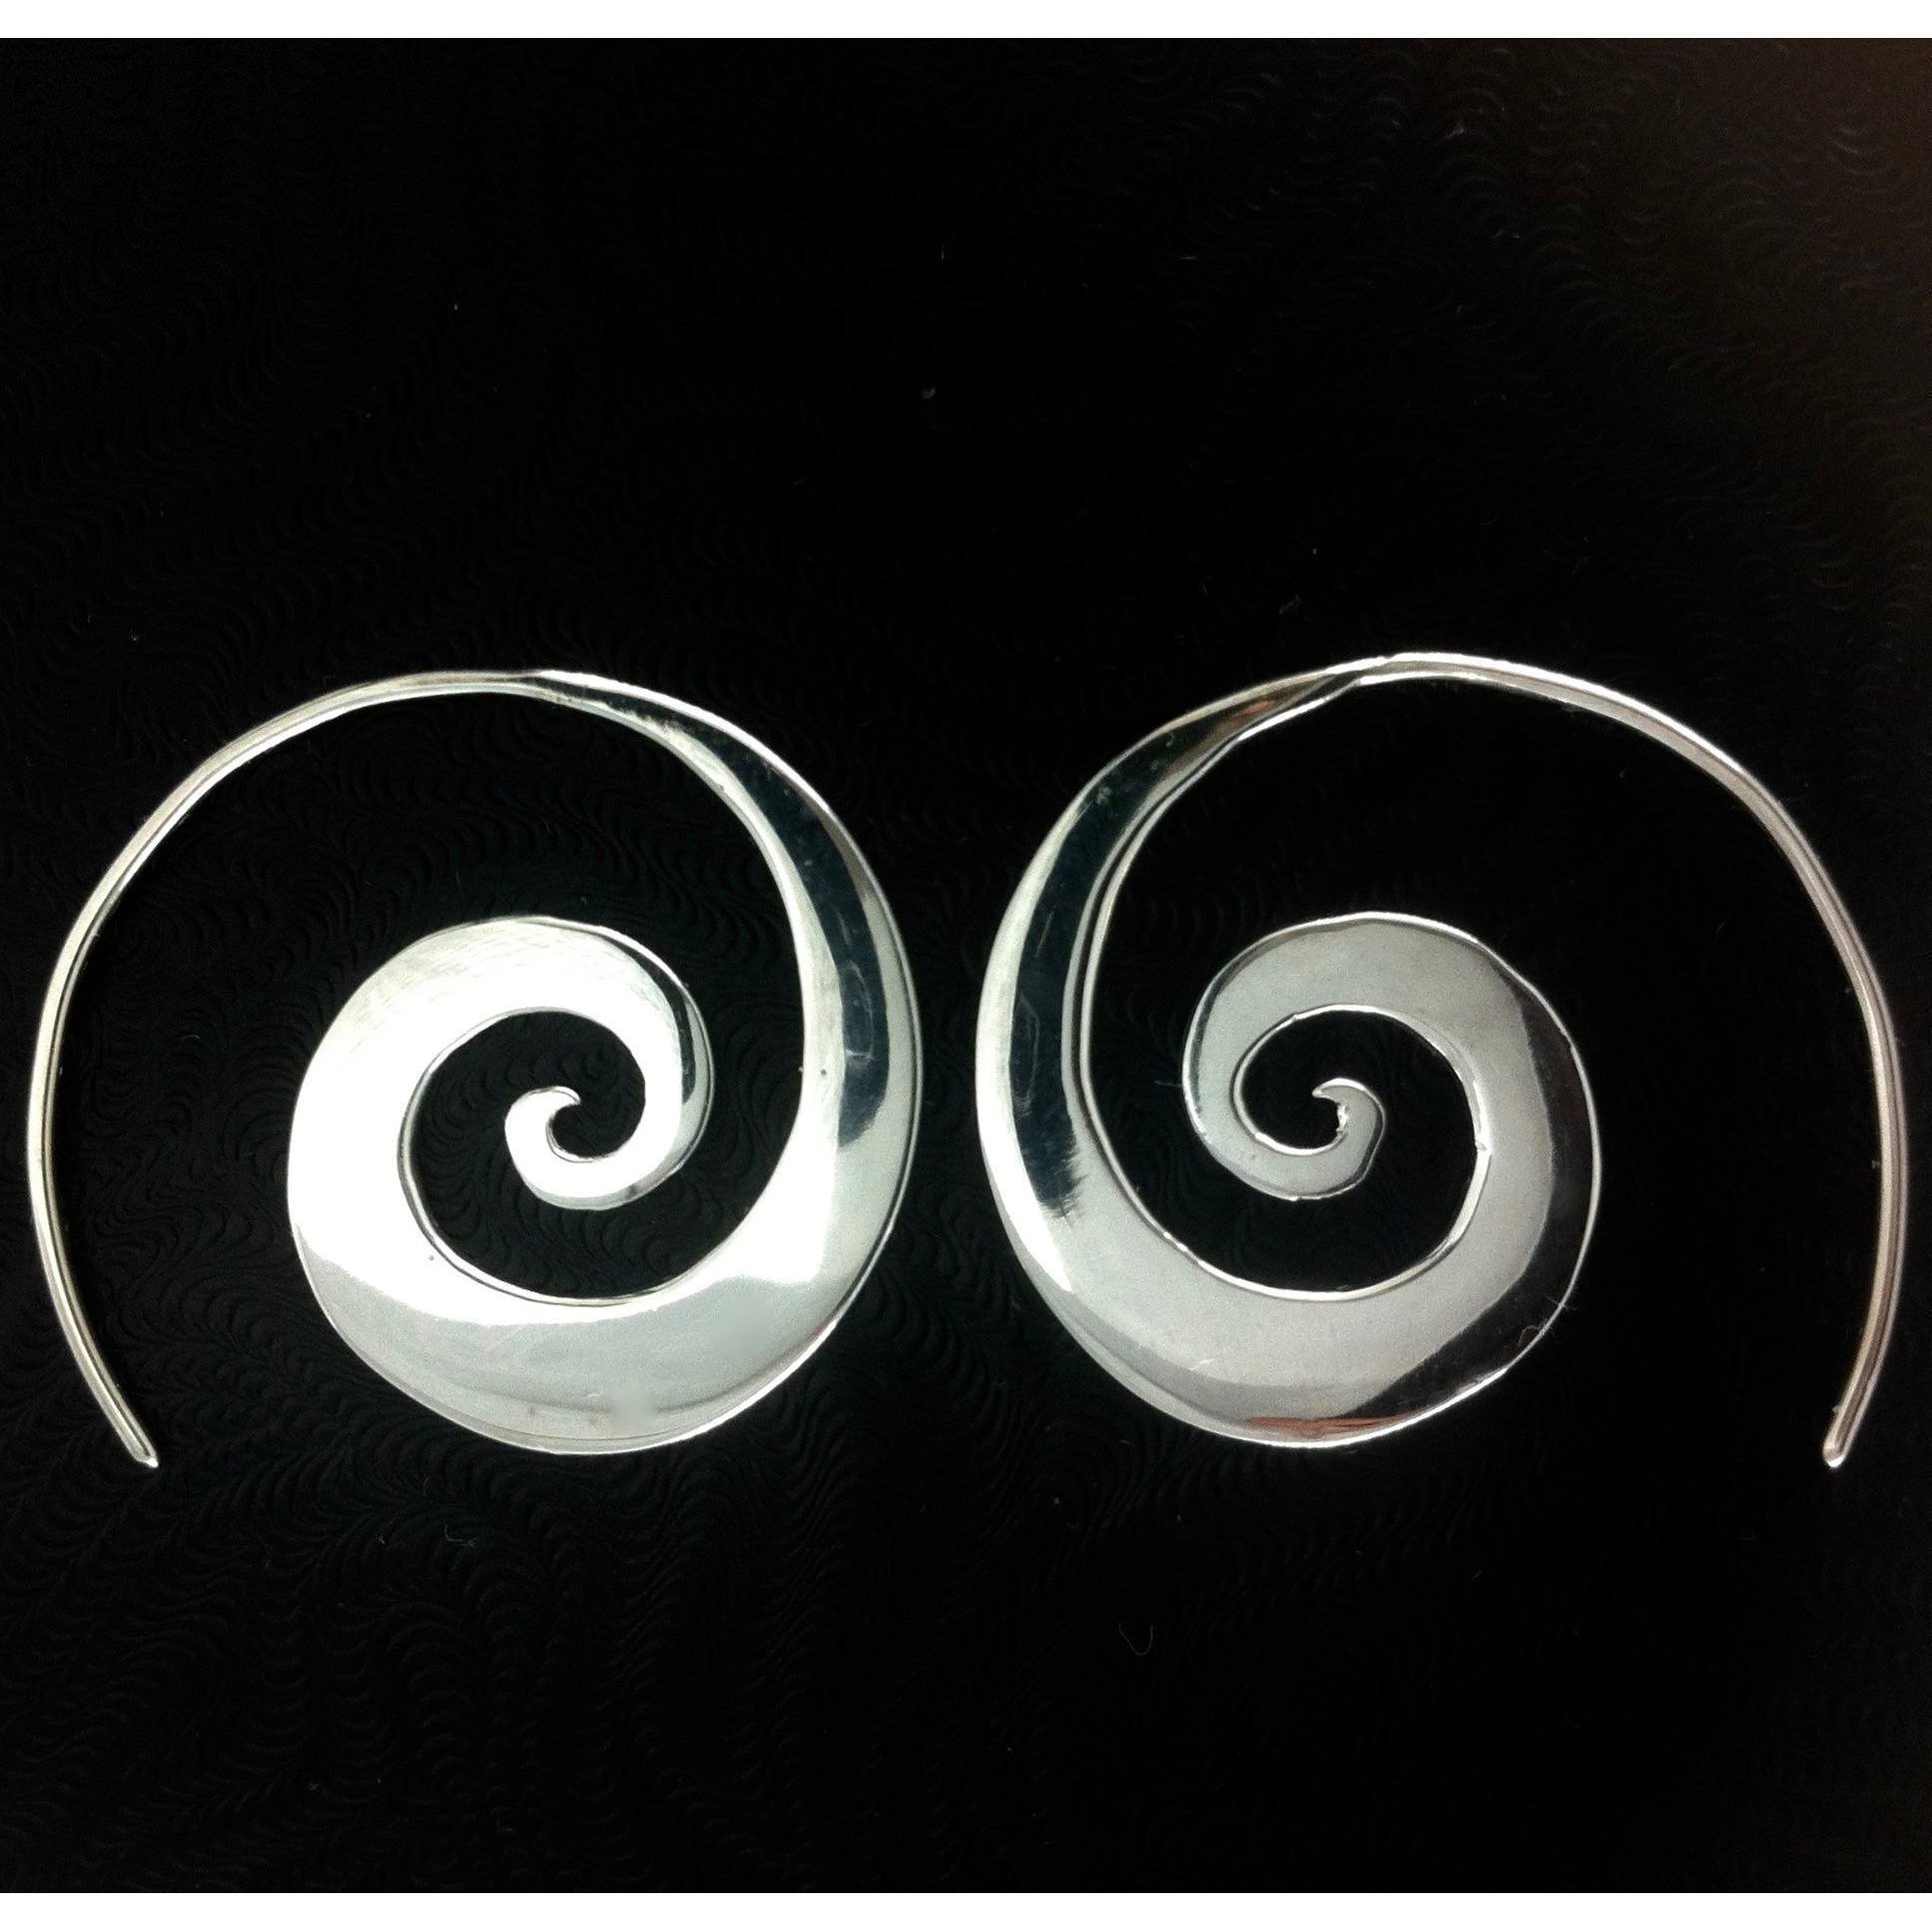 Tribal Earrings :|: Spiral. sterling silver, 925 tribal earrings.